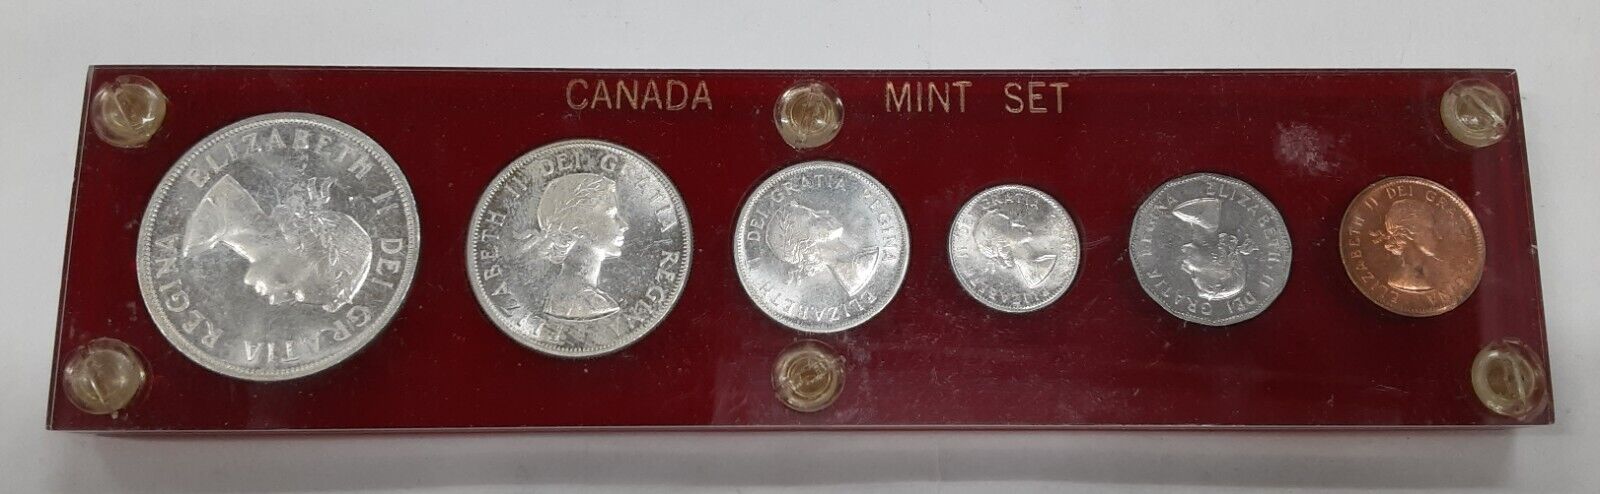 1958 Canada 6 Coin Mint Set Queen Elizabeth II BU in Red Acrylic Holder